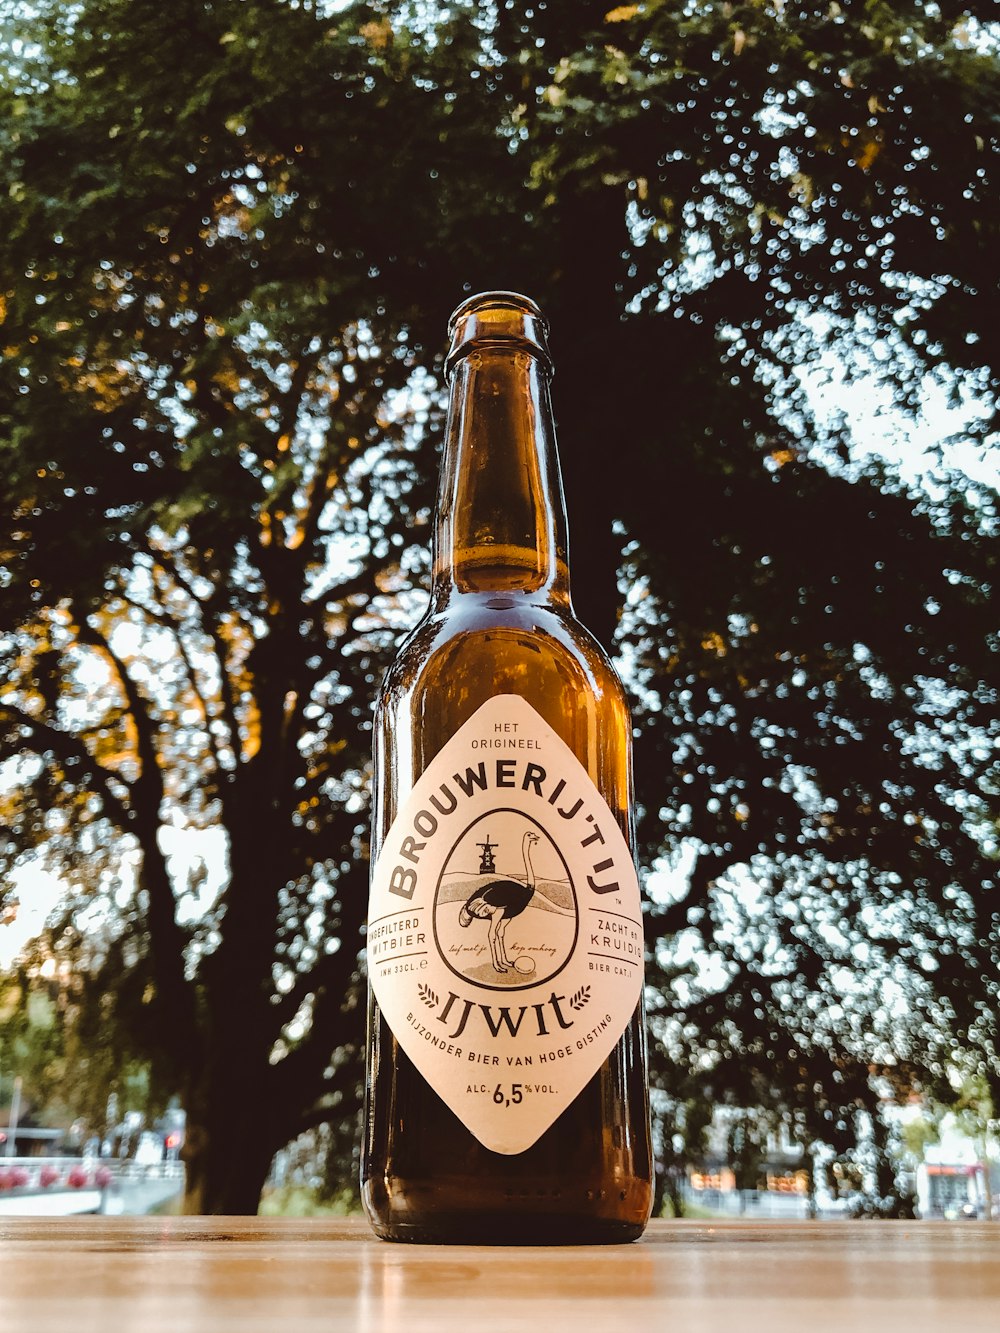 Brouwerij'tly beer bottle on the desk